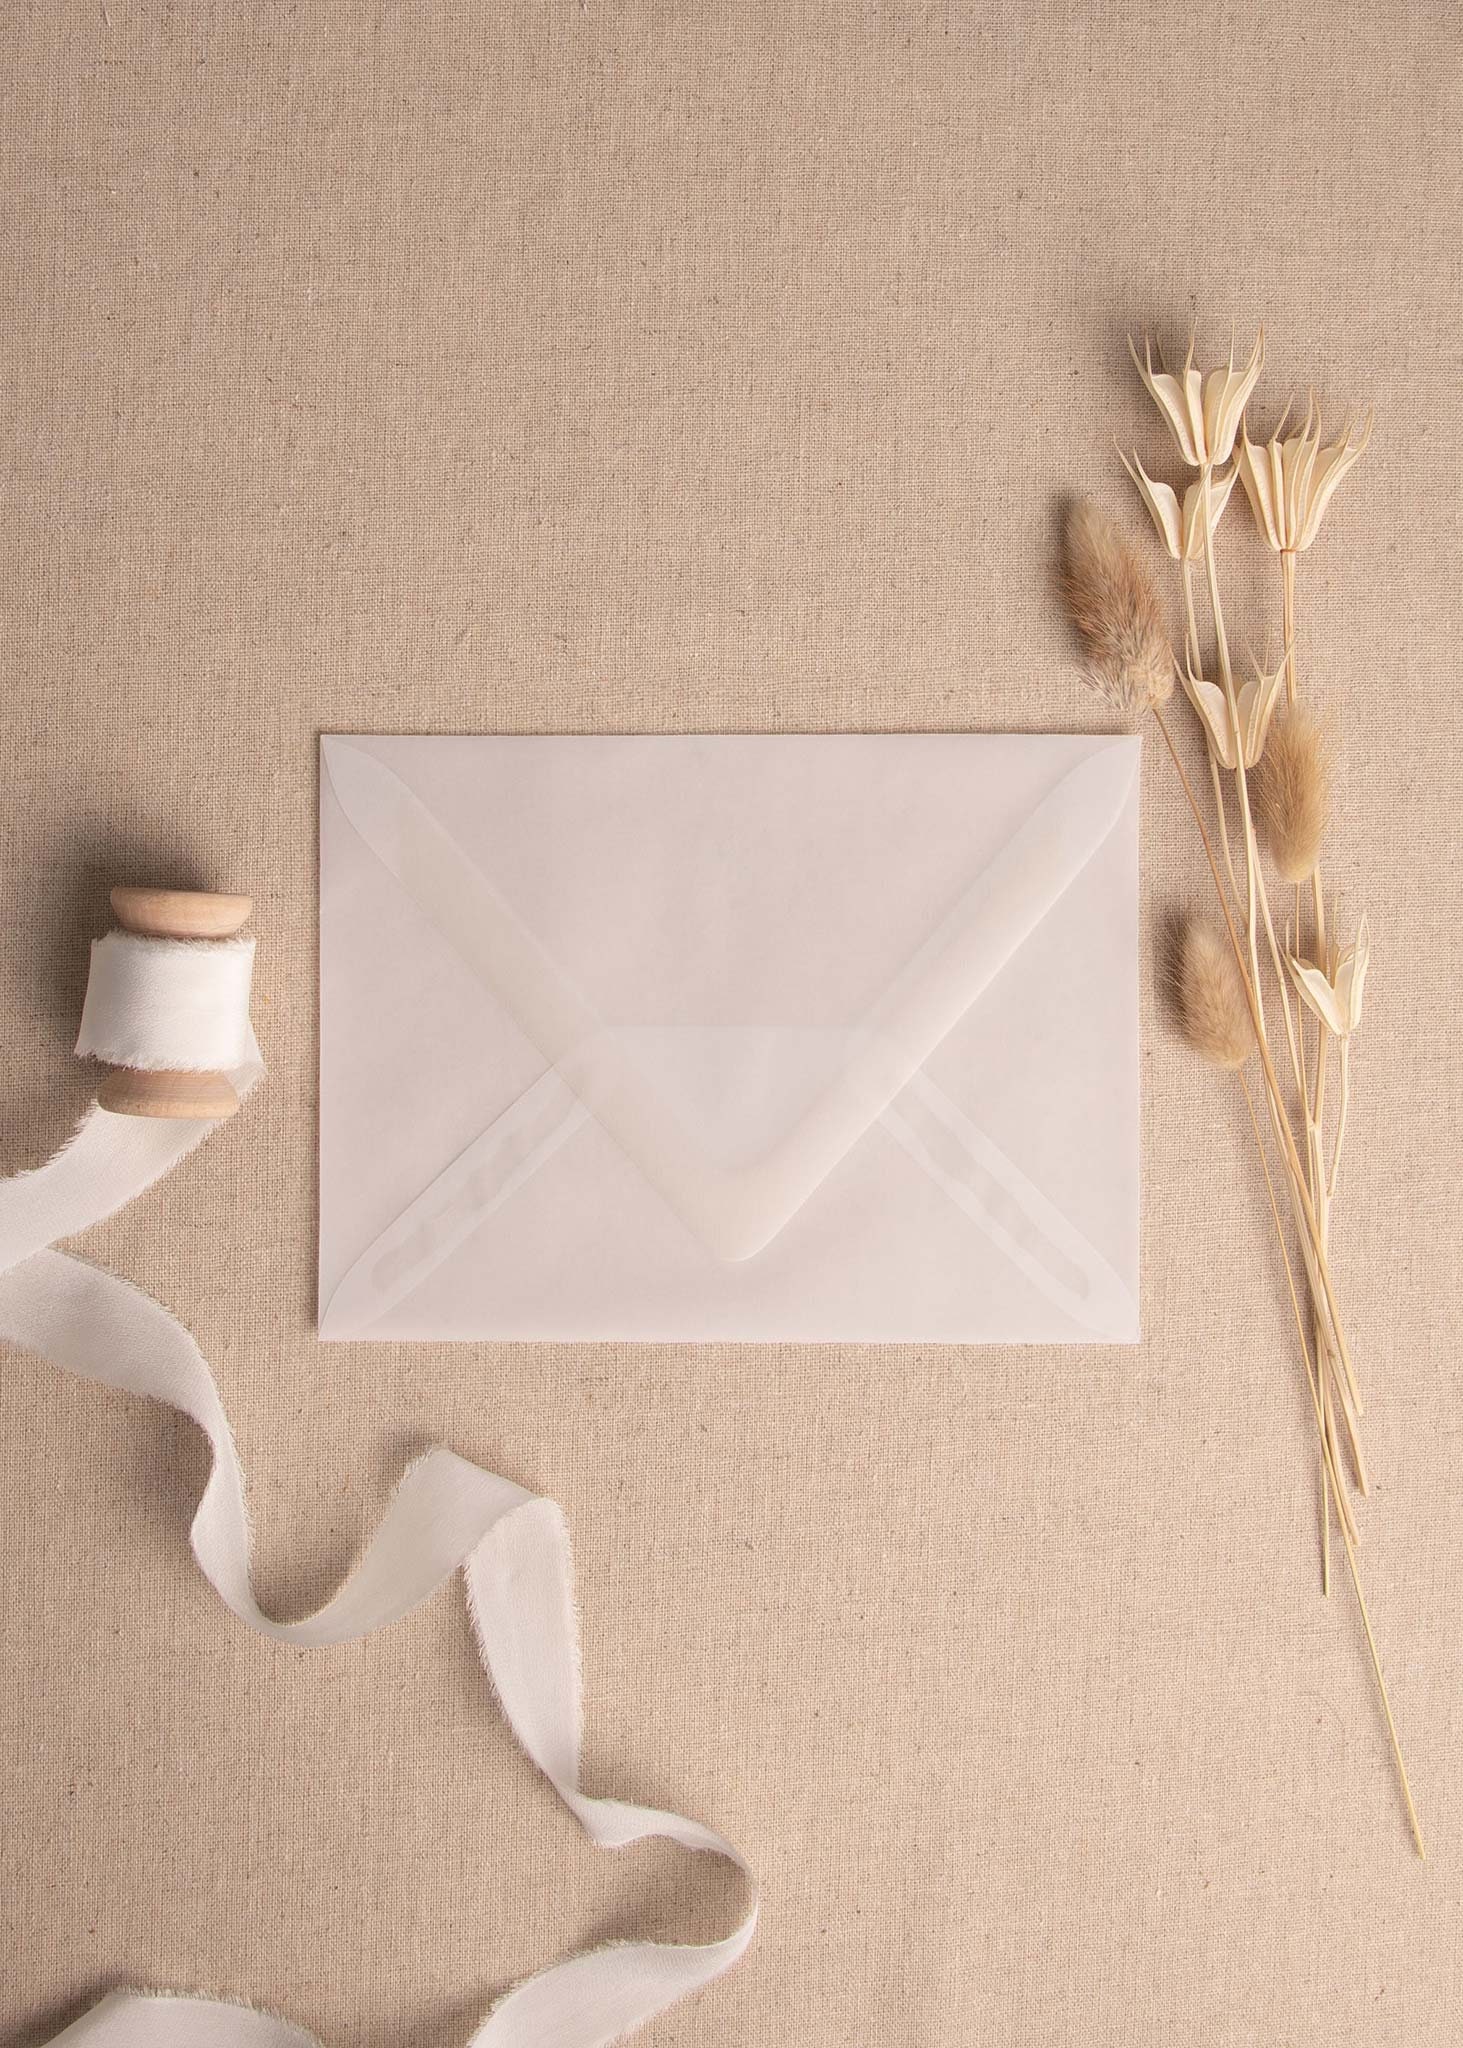 5×7 Translucent Vellum Envelopes  Premier Invitation & Paper Specialists  Starfish Lane Leading Invitation Specialists